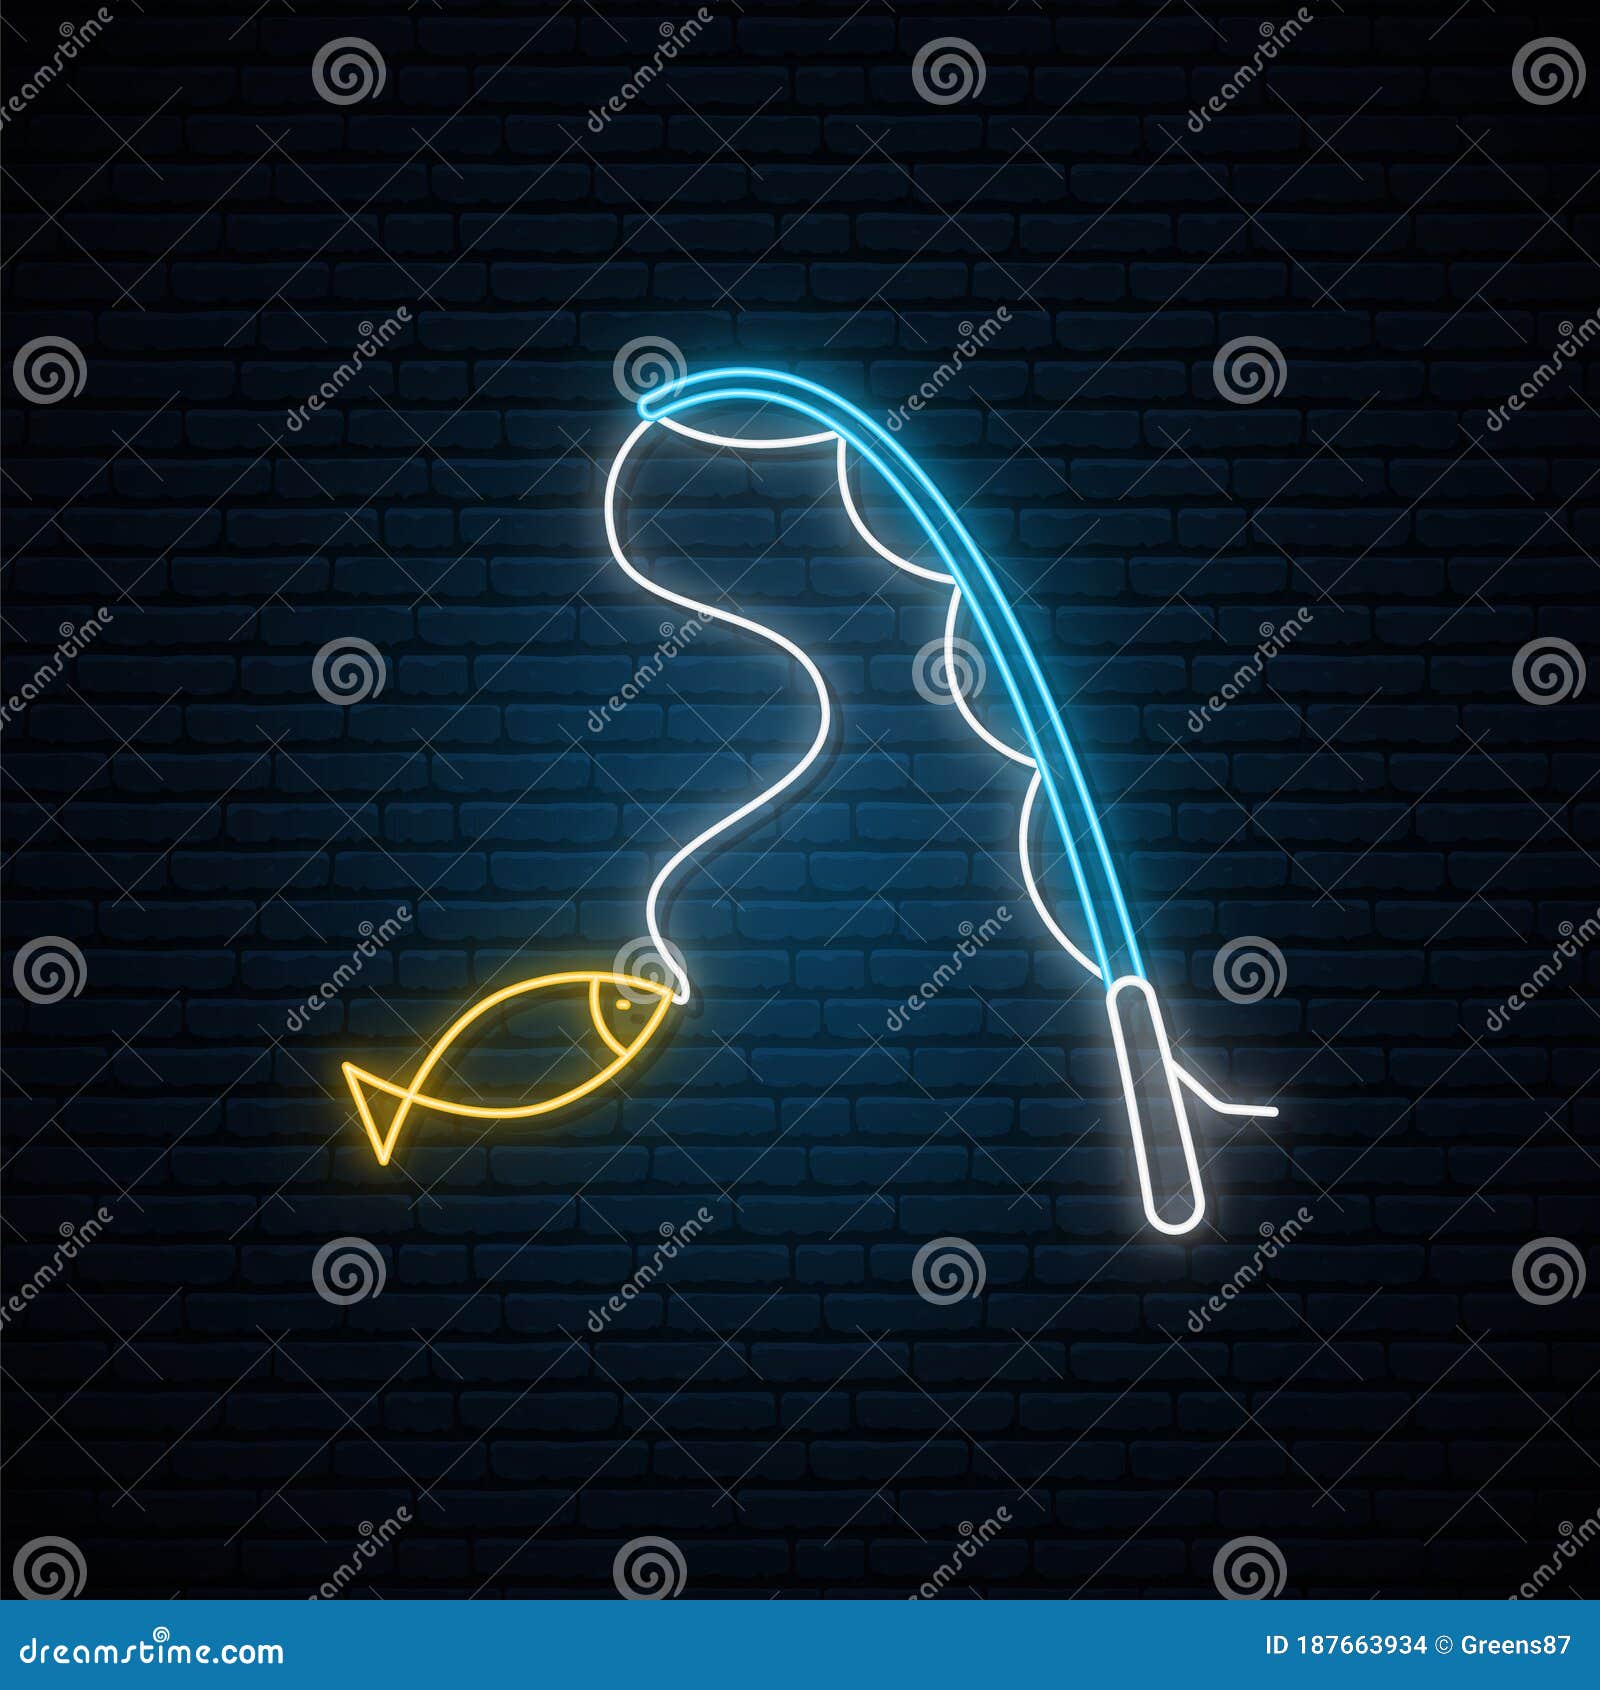 https://thumbs.dreamstime.com/z/neon-fishing-sign-neon-fishing-sign-glowing-fishing-rod-fish-icon-isolated-brick-wall-background-fishing-equipment-emblem-187663934.jpg